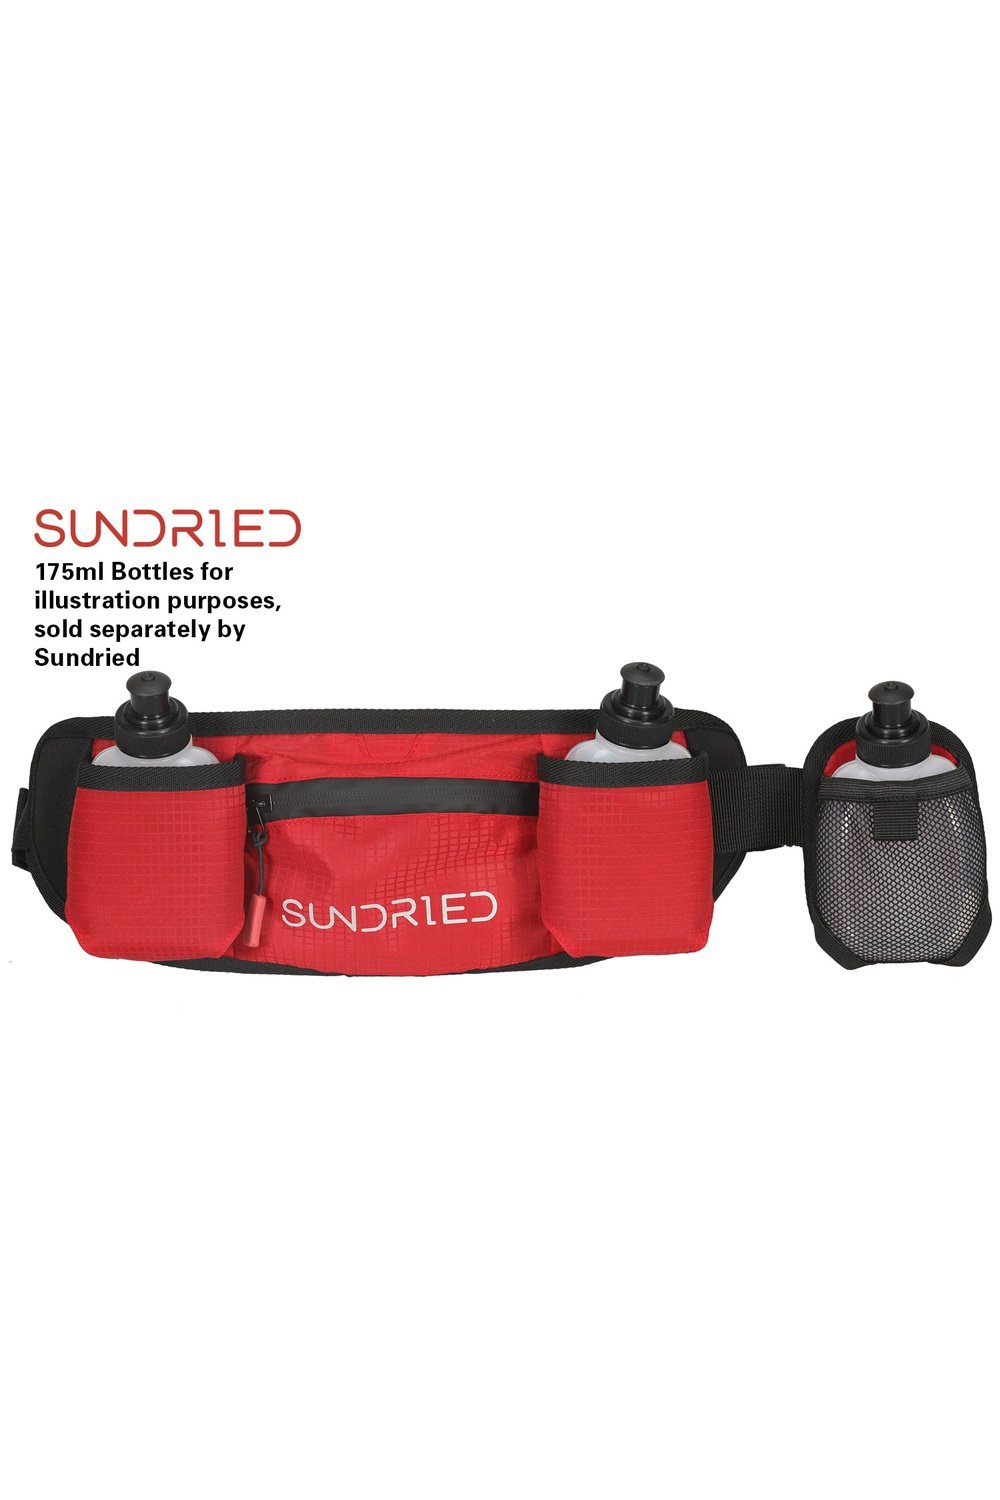 Sundried Accessories Belt Multi Bottle Bags SD0406 Activewear